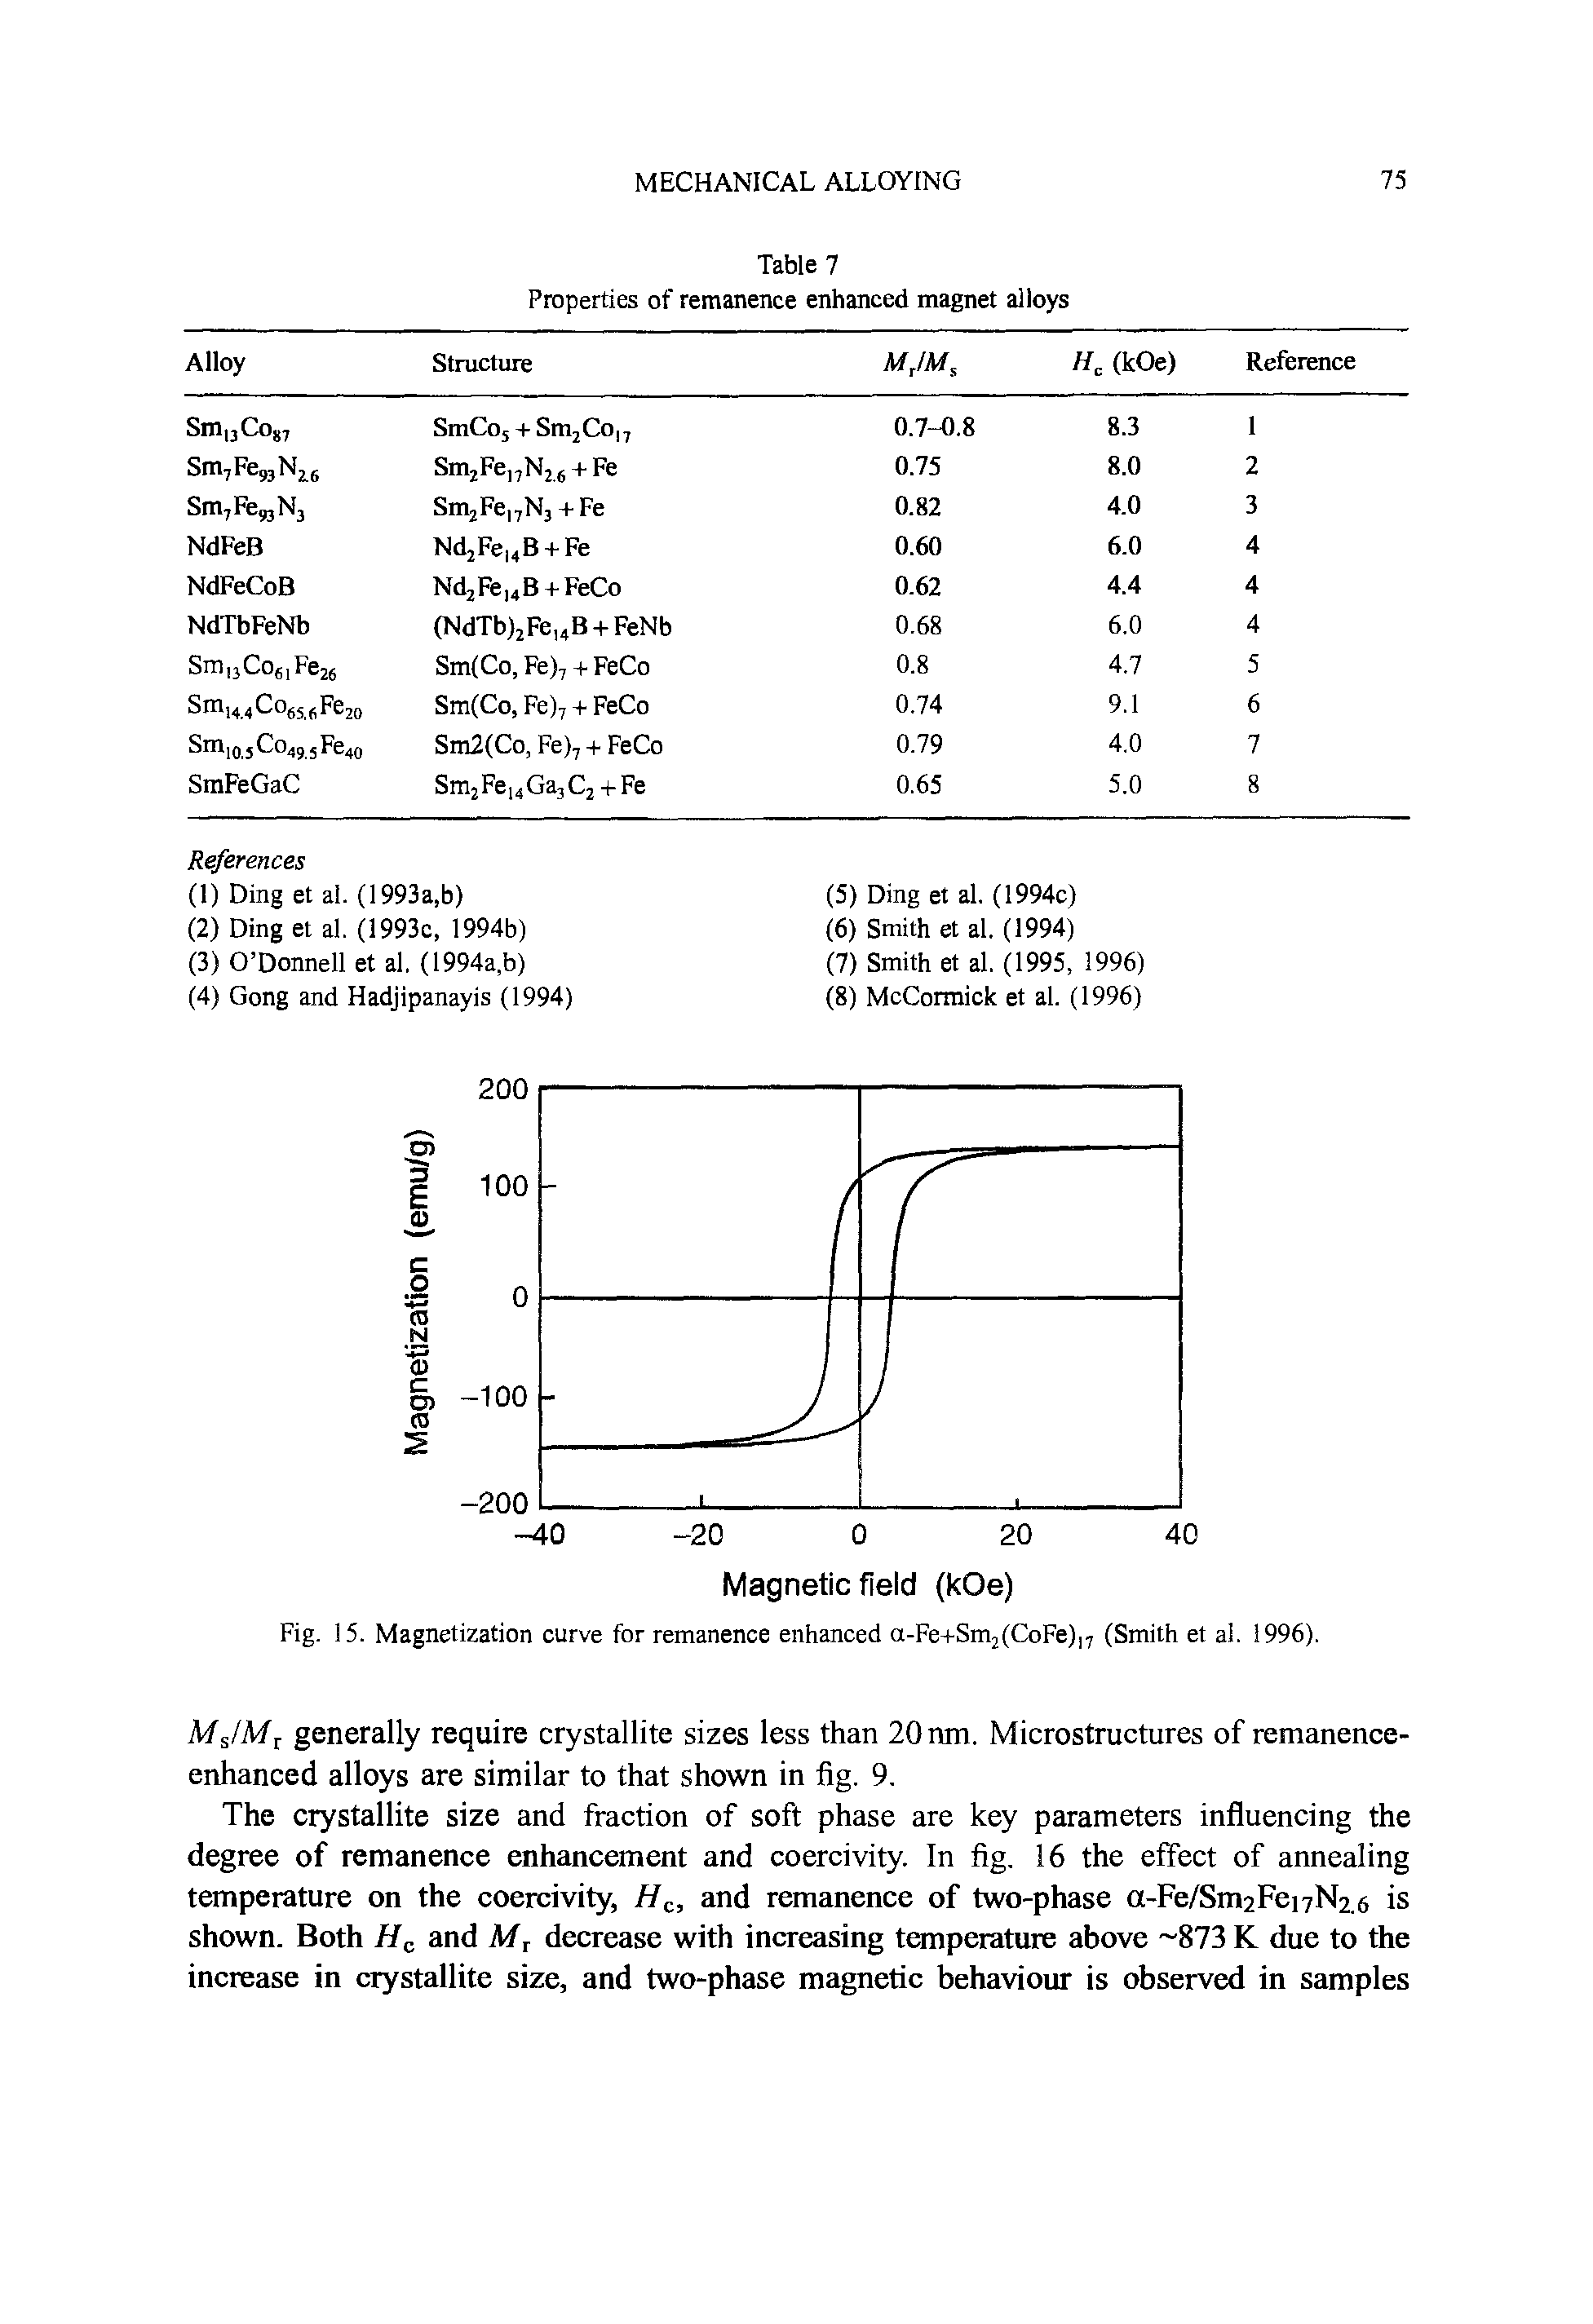 Fig. 15. Magnetization curve for remanence enhanced a-Fe+Sm2(CoFe)i7 (Smith et al. 1996).